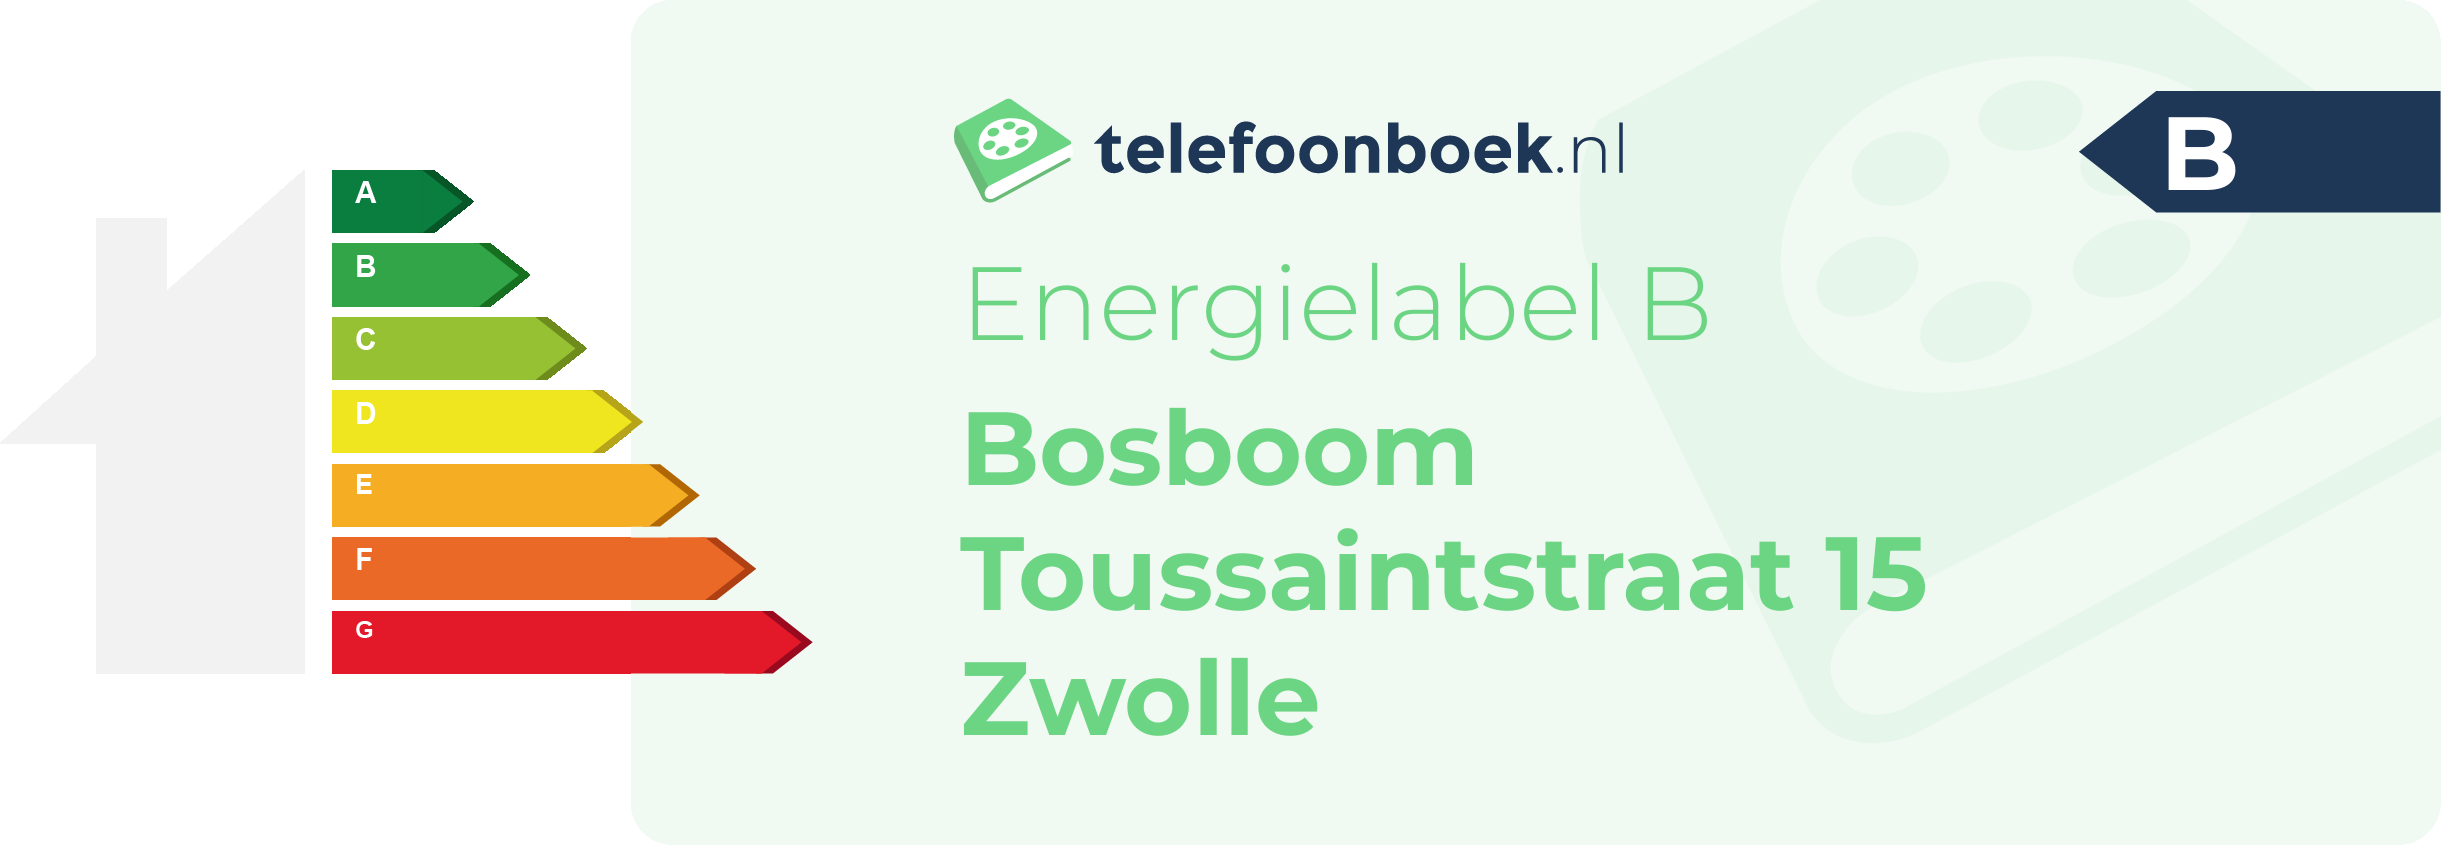 Energielabel Bosboom Toussaintstraat 15 Zwolle